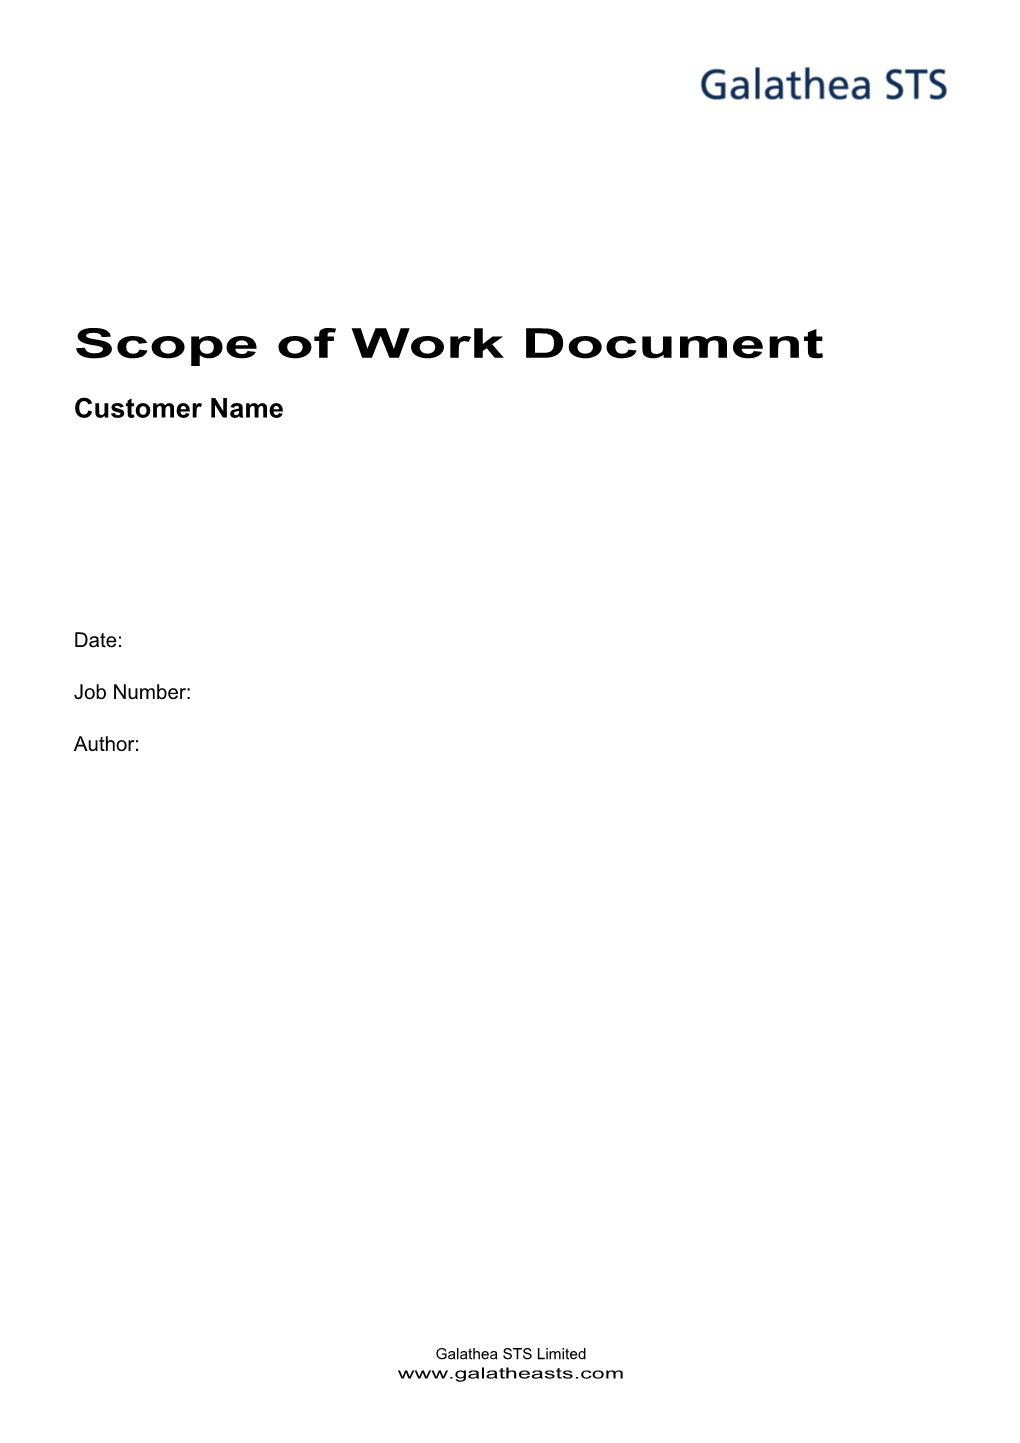 Scope of Work Document